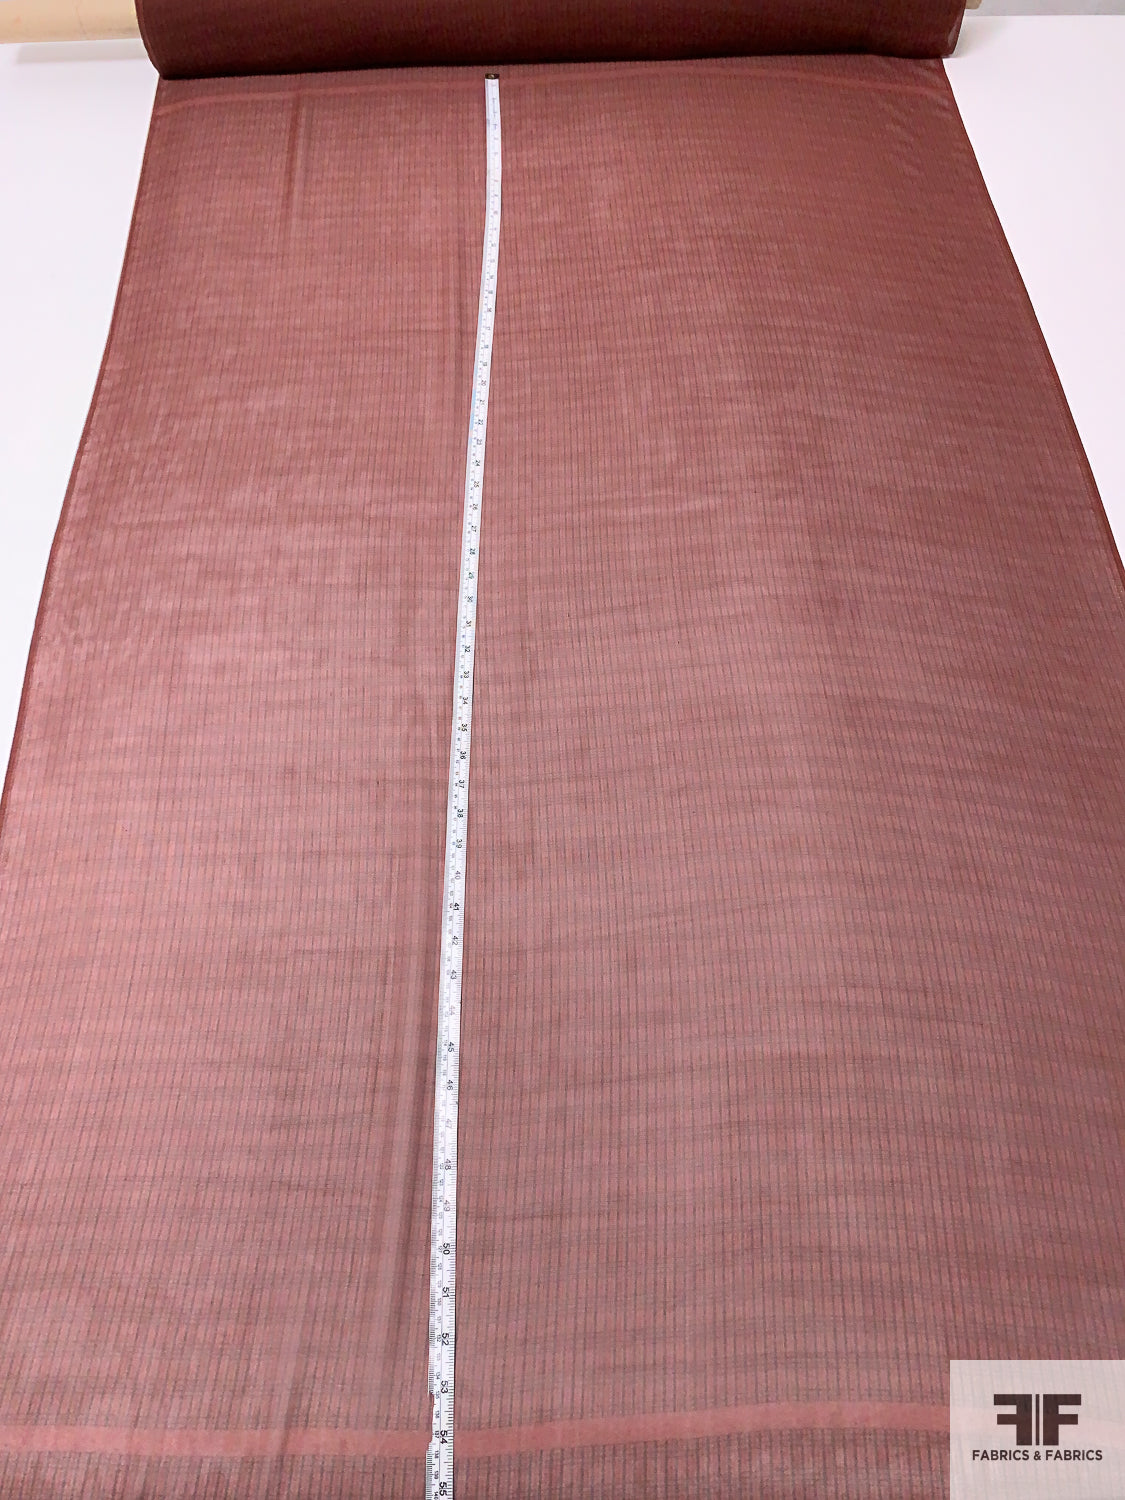 Narrow Plaid Printed Silk Chiffon Panel - Brick / Maroon